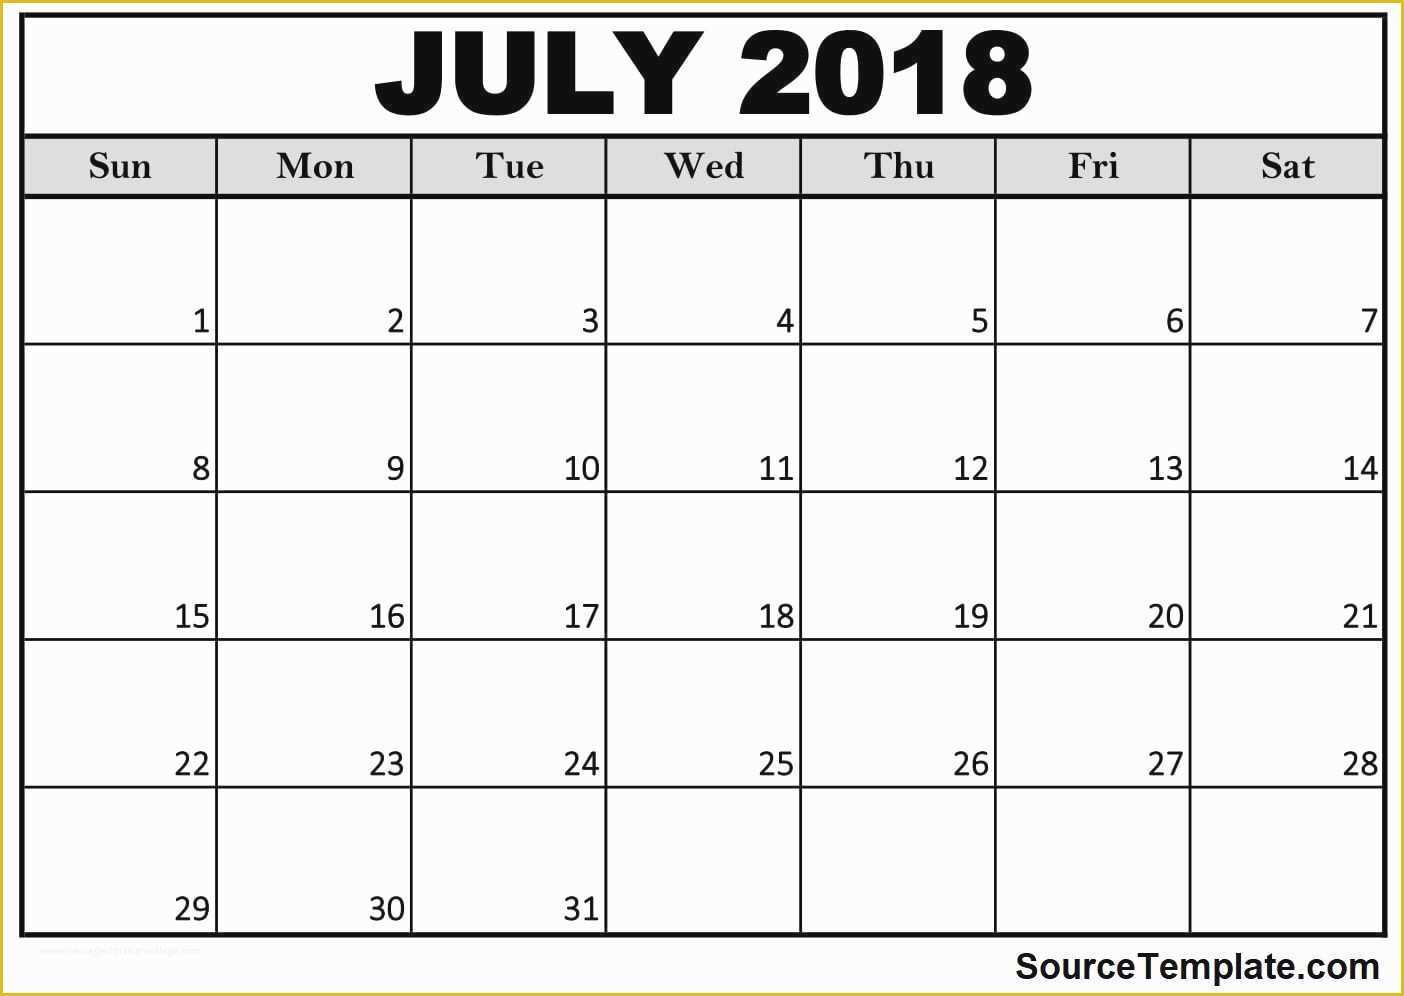 Free Marketing Calendar Template 2018 Of Marketing Calendar Template 2017 Free Awesome Free 5 July